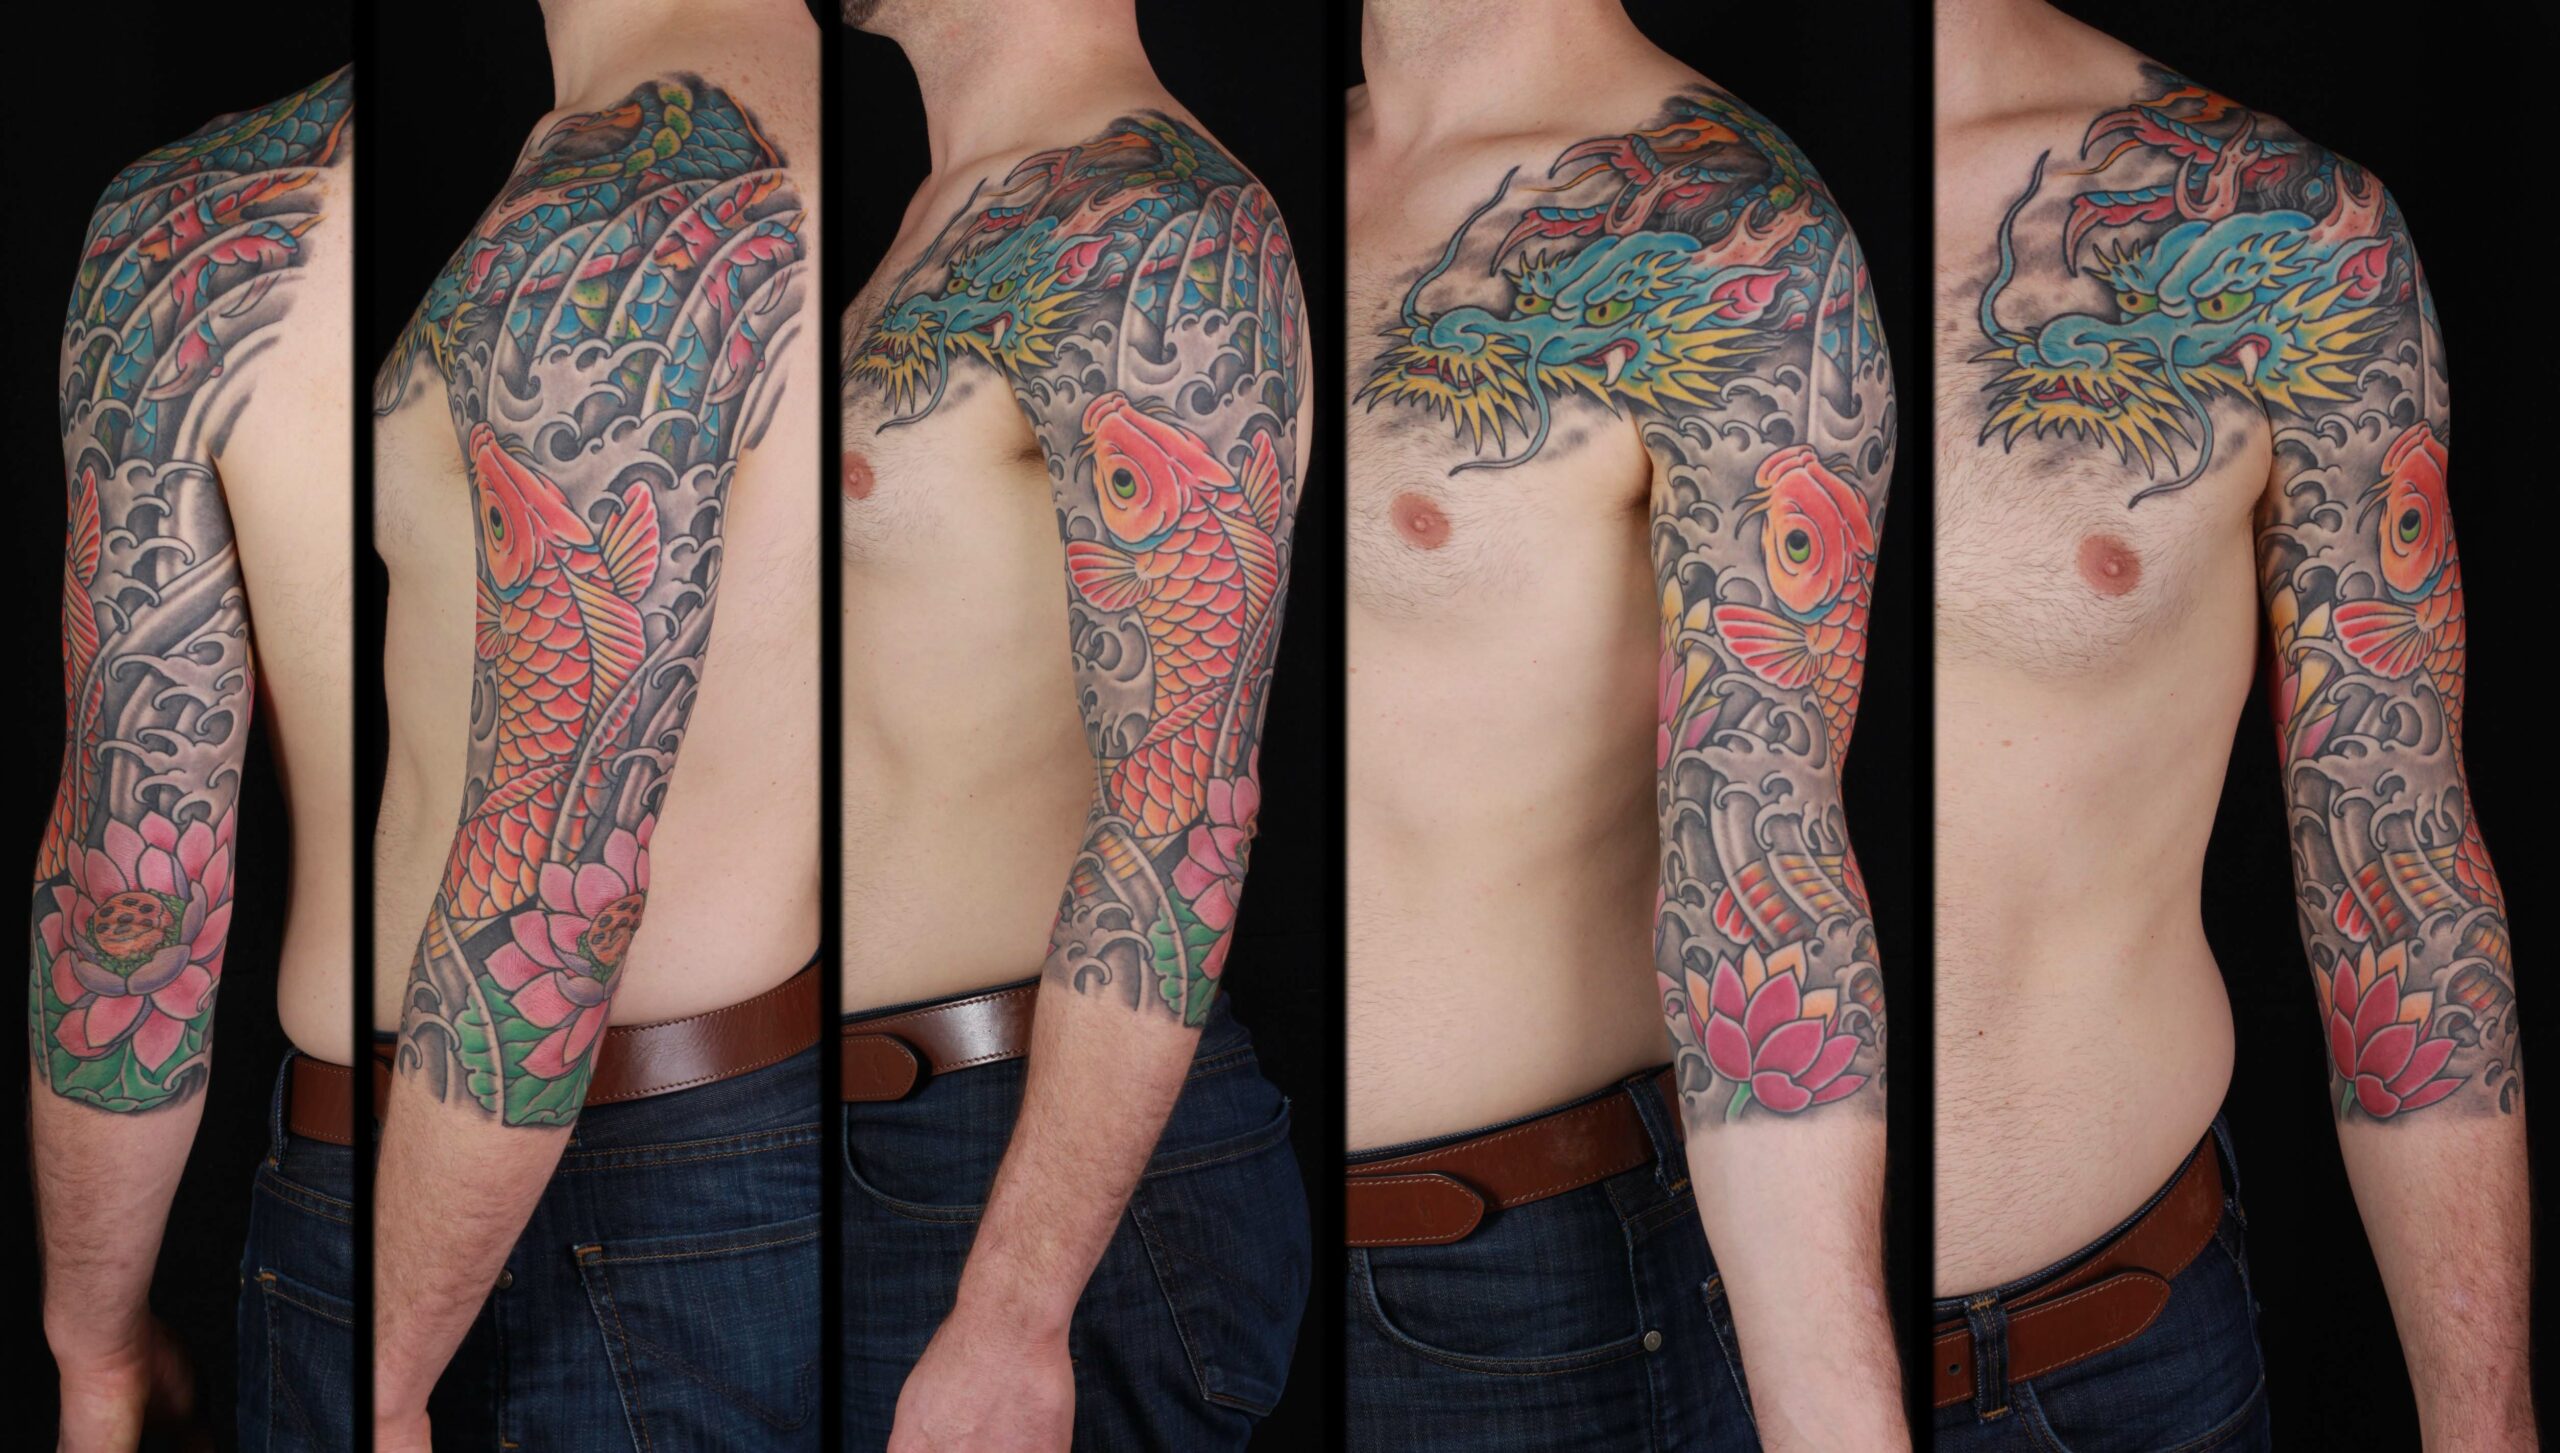 brian-thurow-dedication-tattoo-japanese-dragon-koi-lotus-waves-water-sleeve-arm-chest